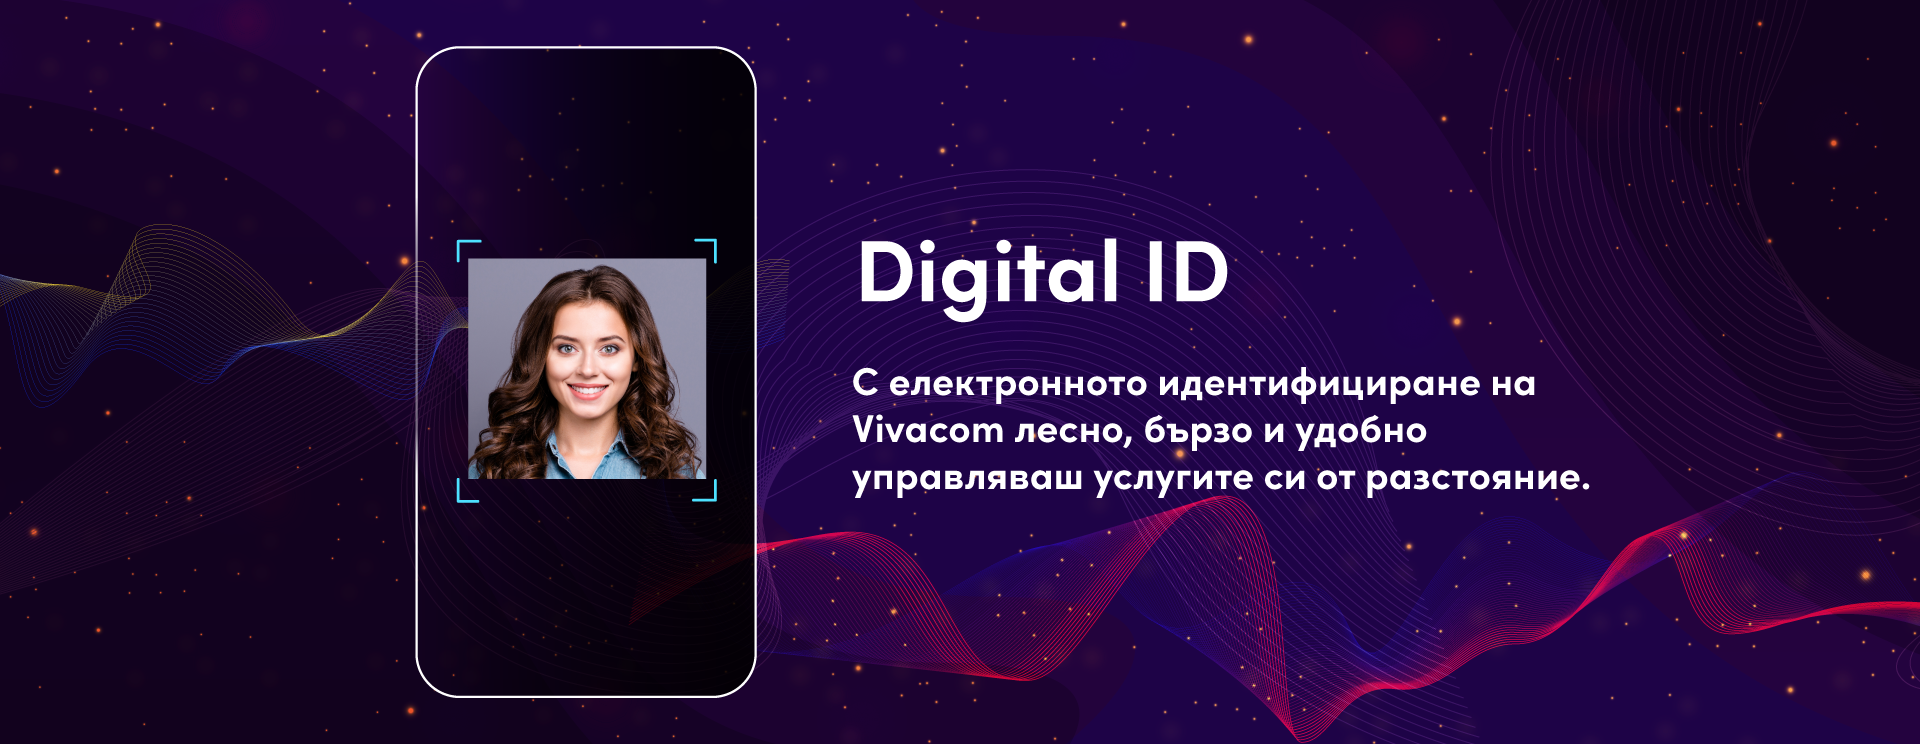 Digital ID header